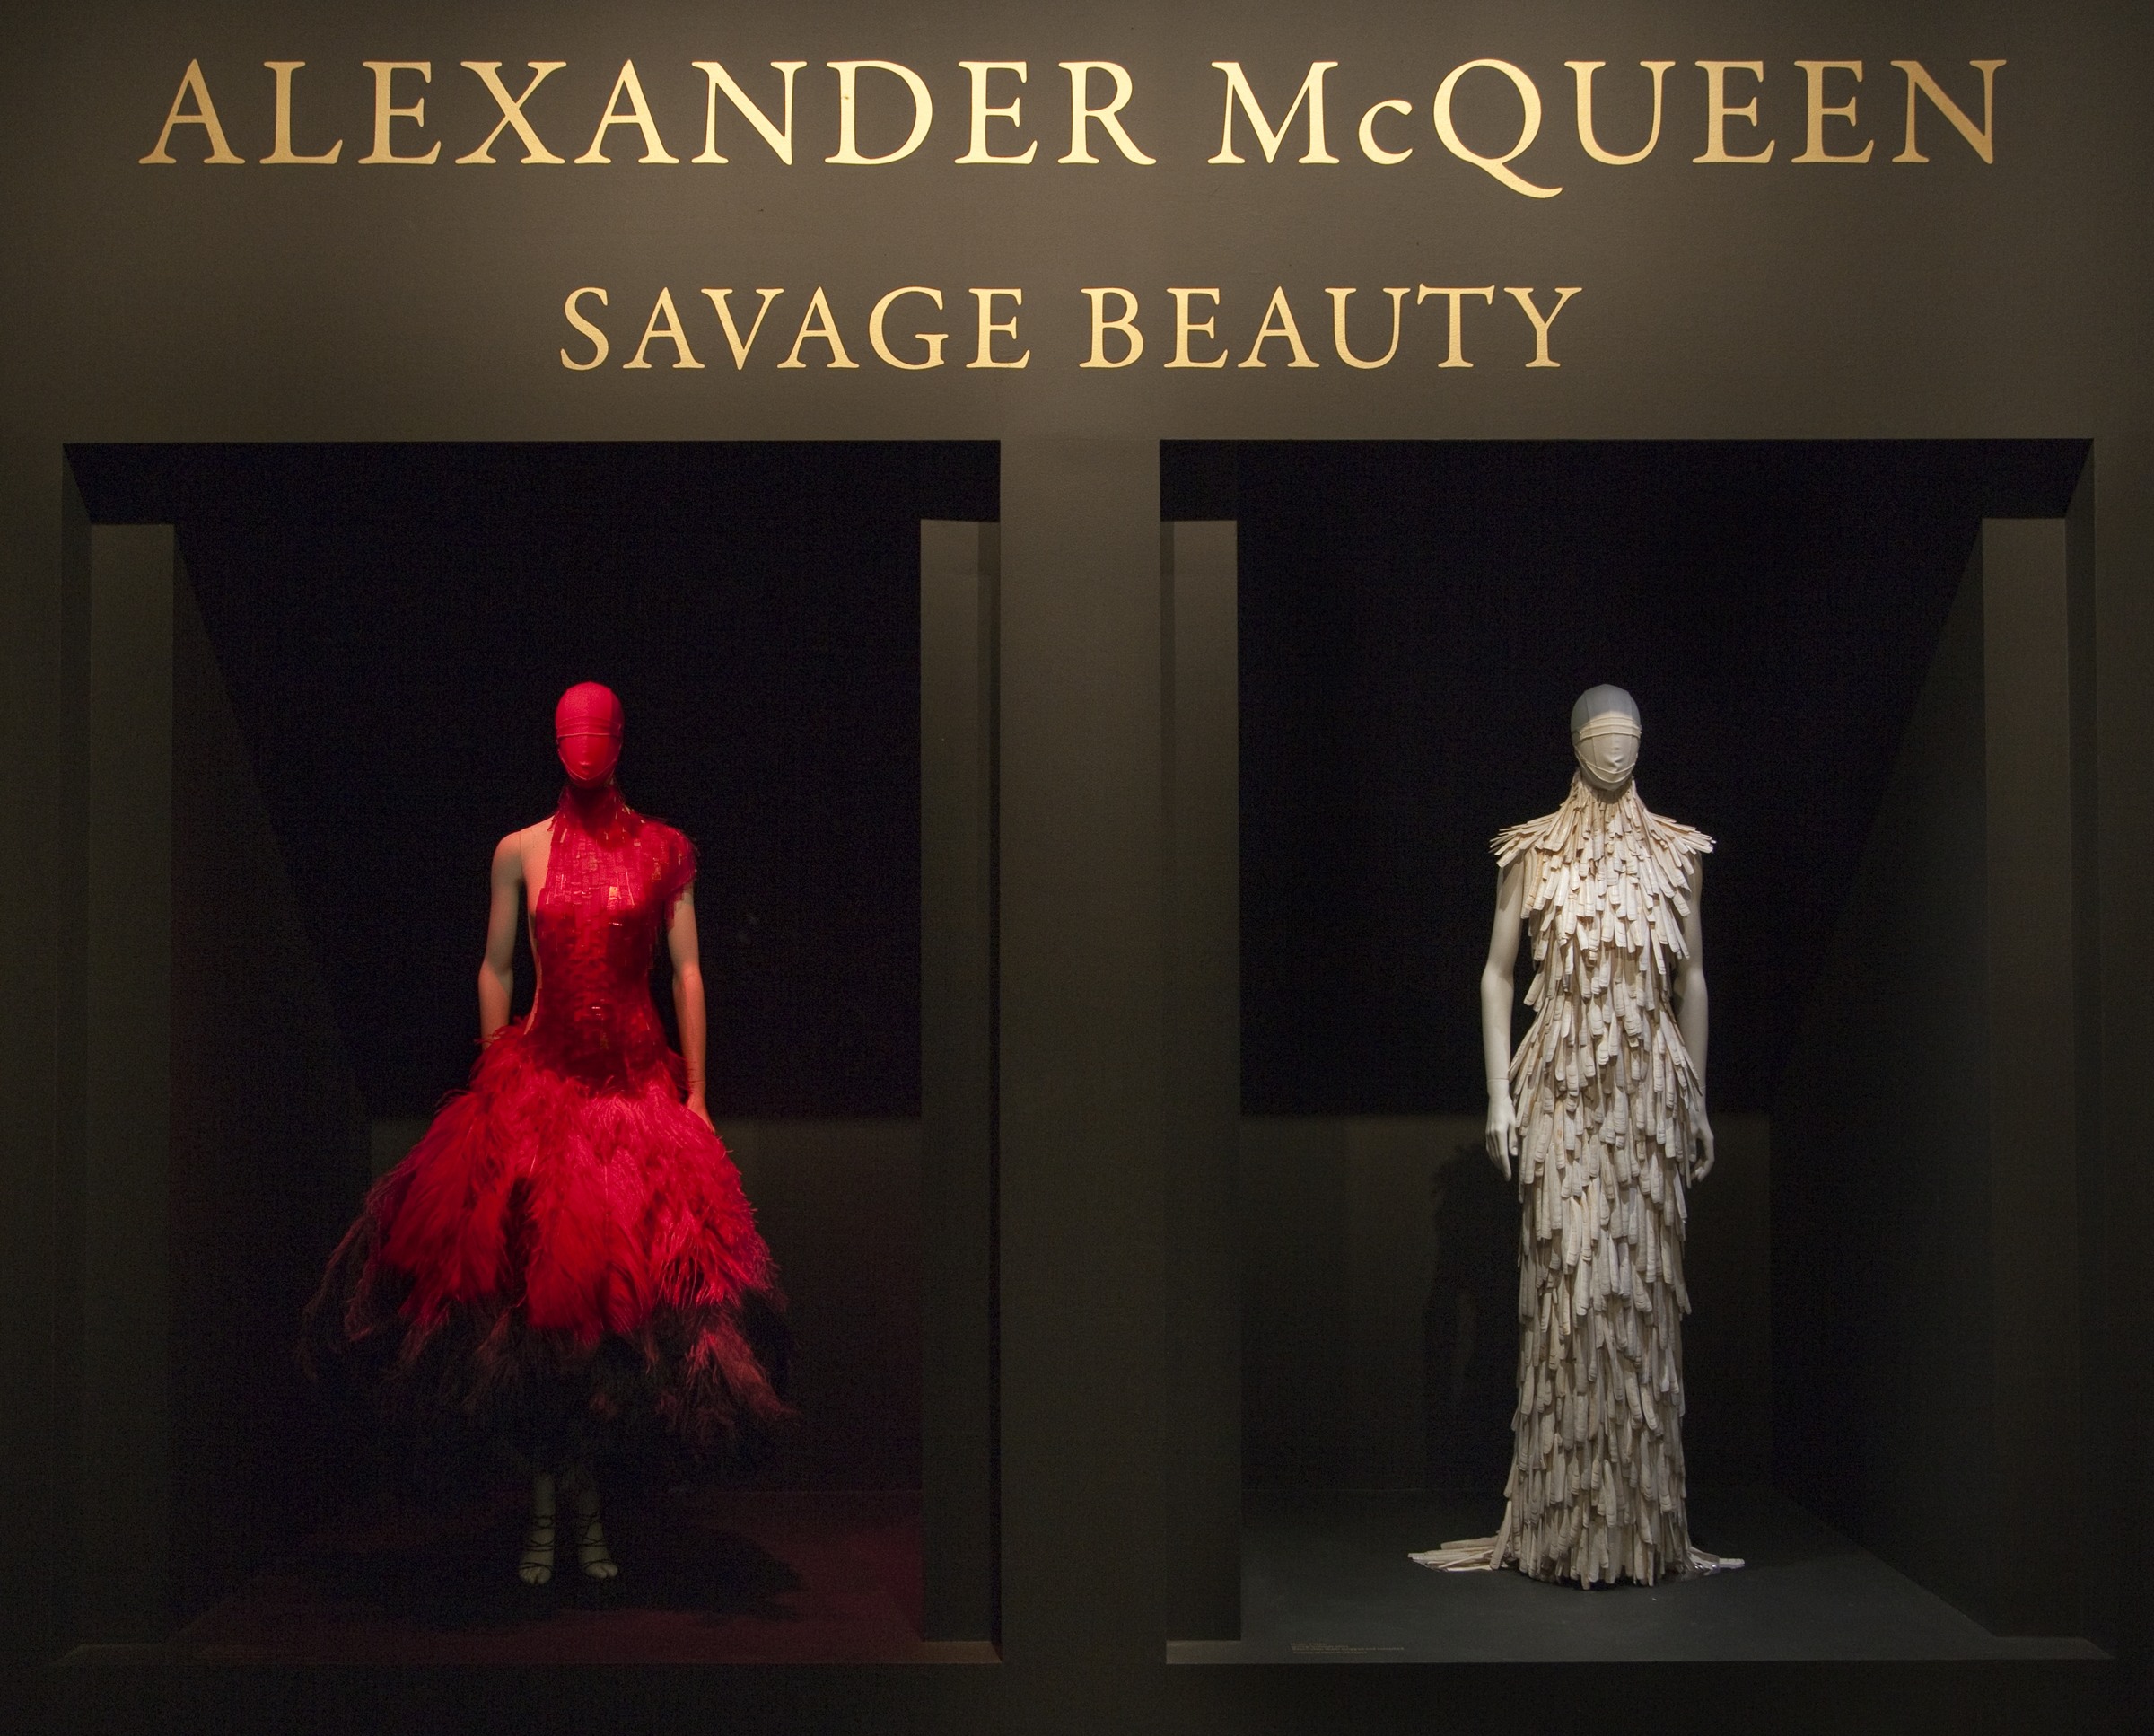 Alexander McQueen's Sartorial Savagery